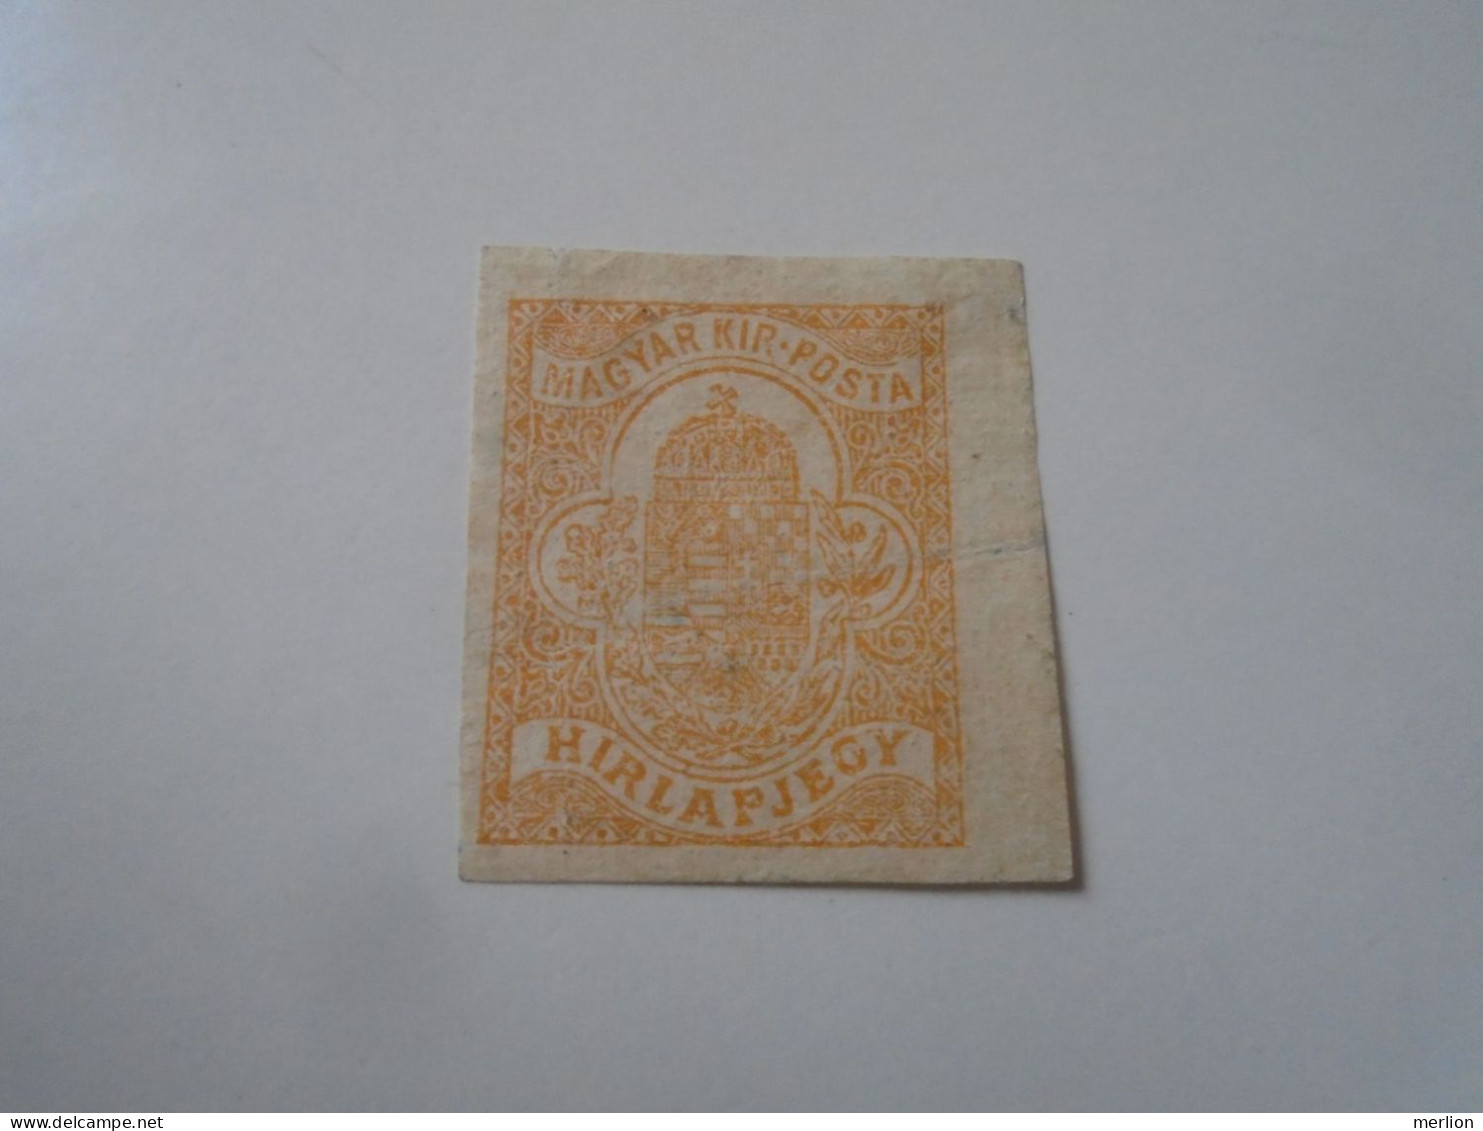 D195525   Hungary - Newspaper   Tax Stamp  Ca 1900  - Hírlapjegy - Kranten